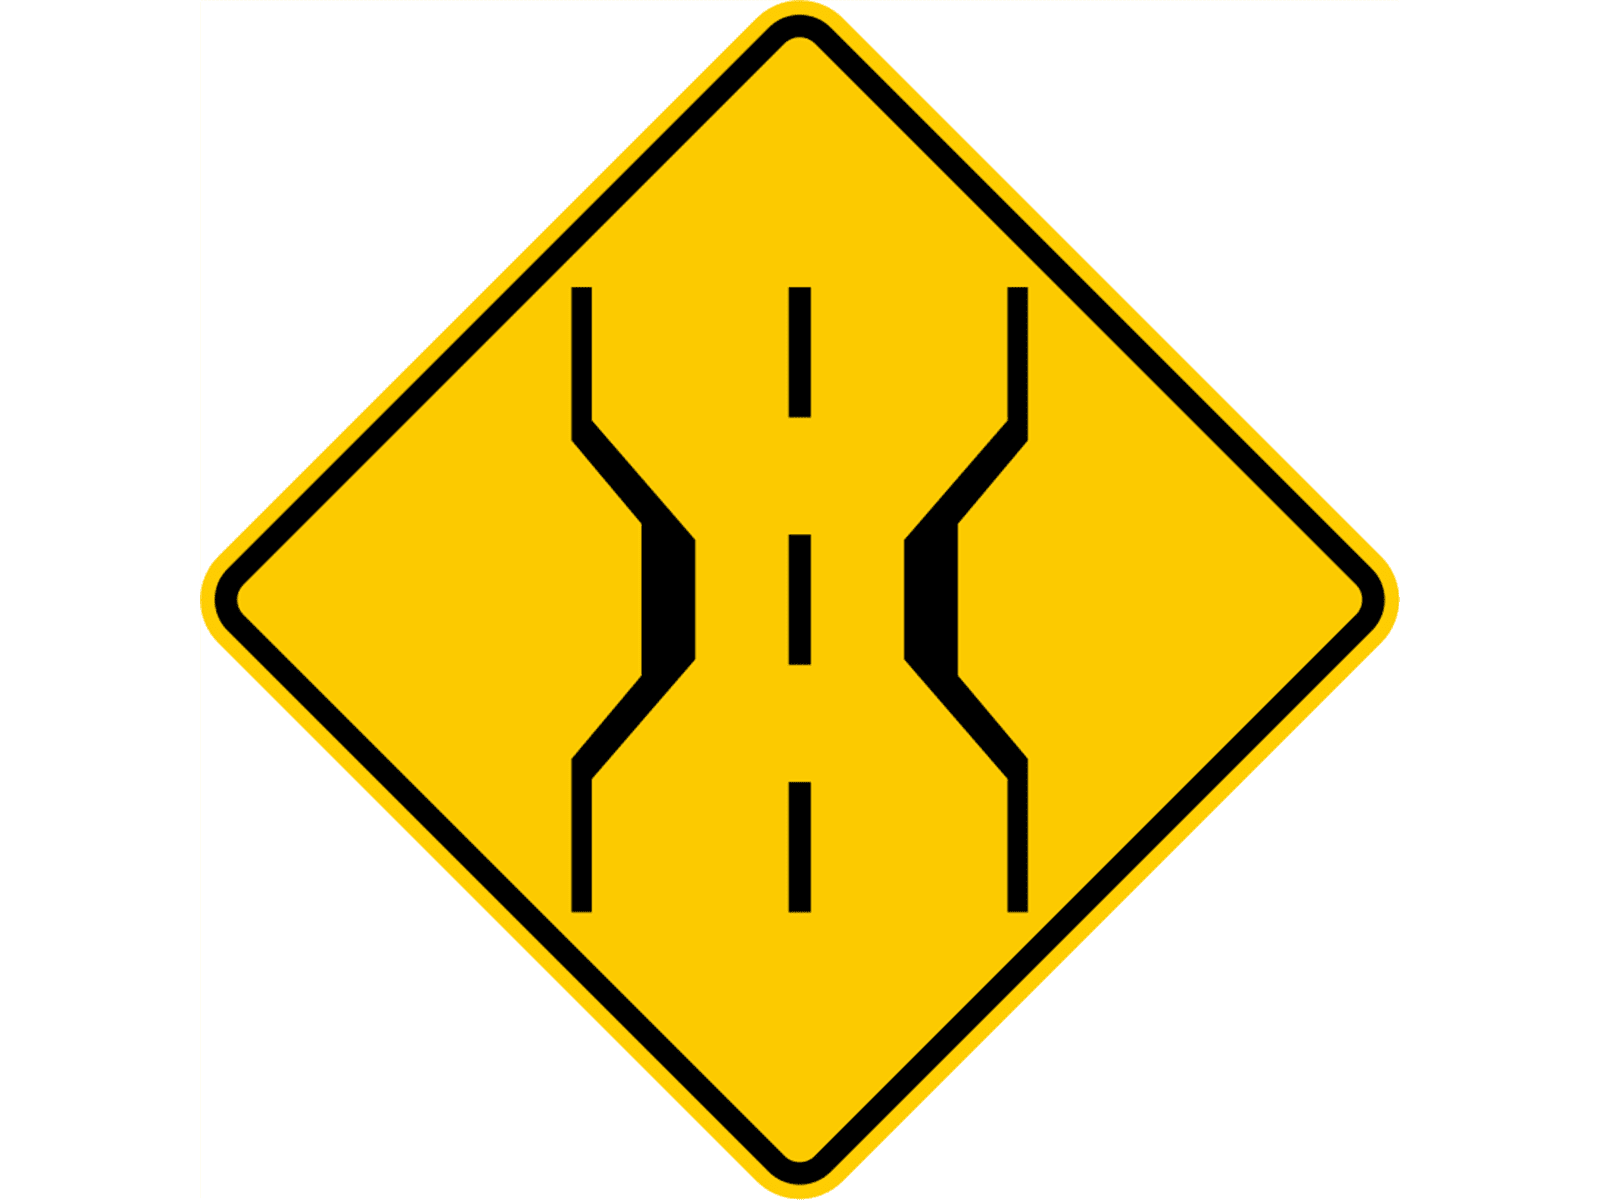 Narrow Bridge W3-4a - W3: Advance Traffic Control